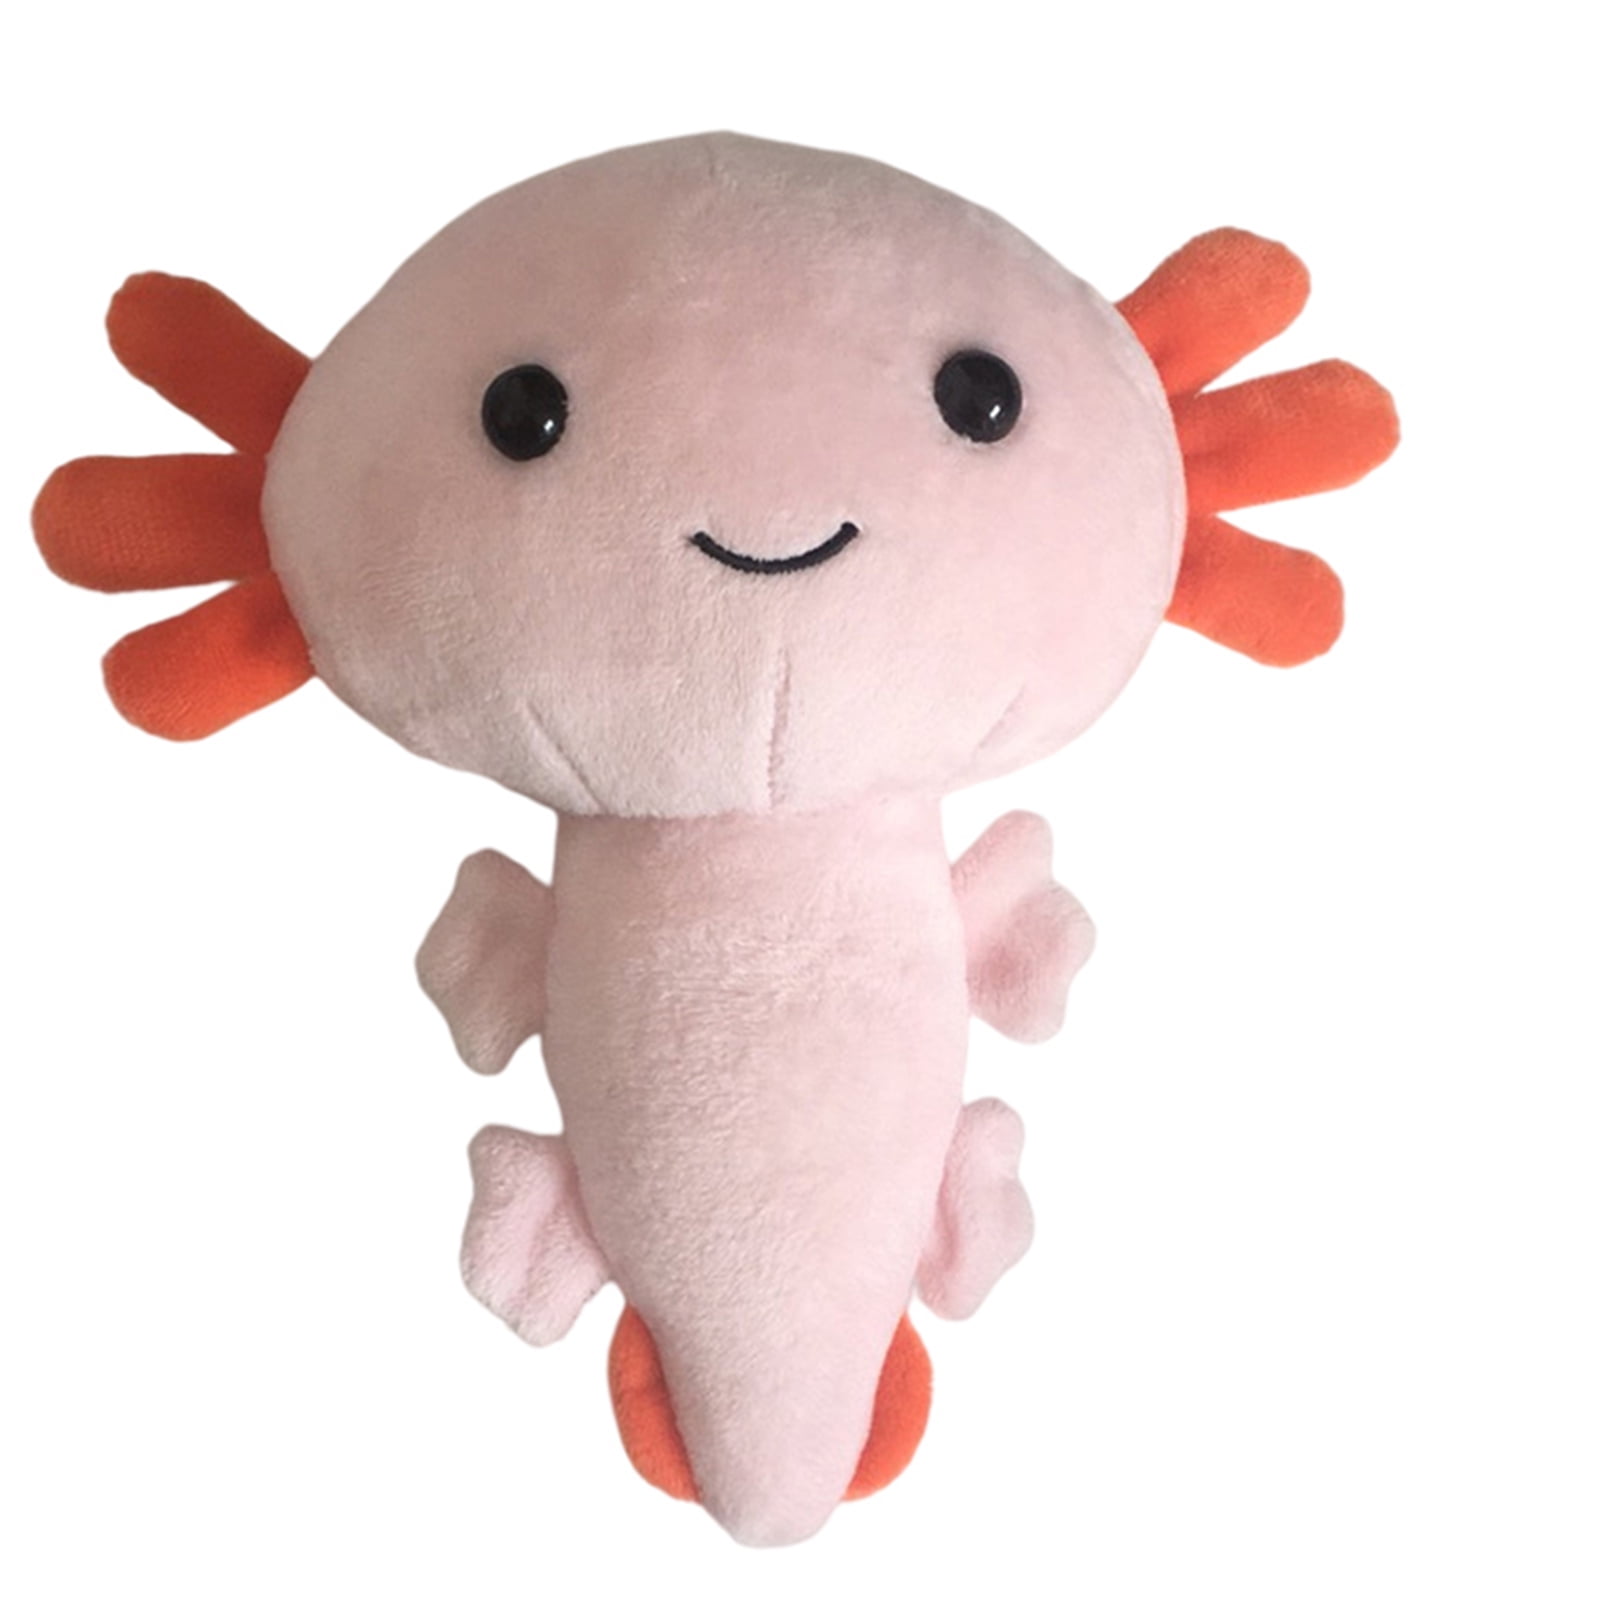 Axolotl Plush Toys | Soft Cute Axolotl Stuffed Animal Axolotl Plushie Pillow Doll | Axolotl Plush Toy Cute Axolotl Plush Toy Pillow for Kids Birthday